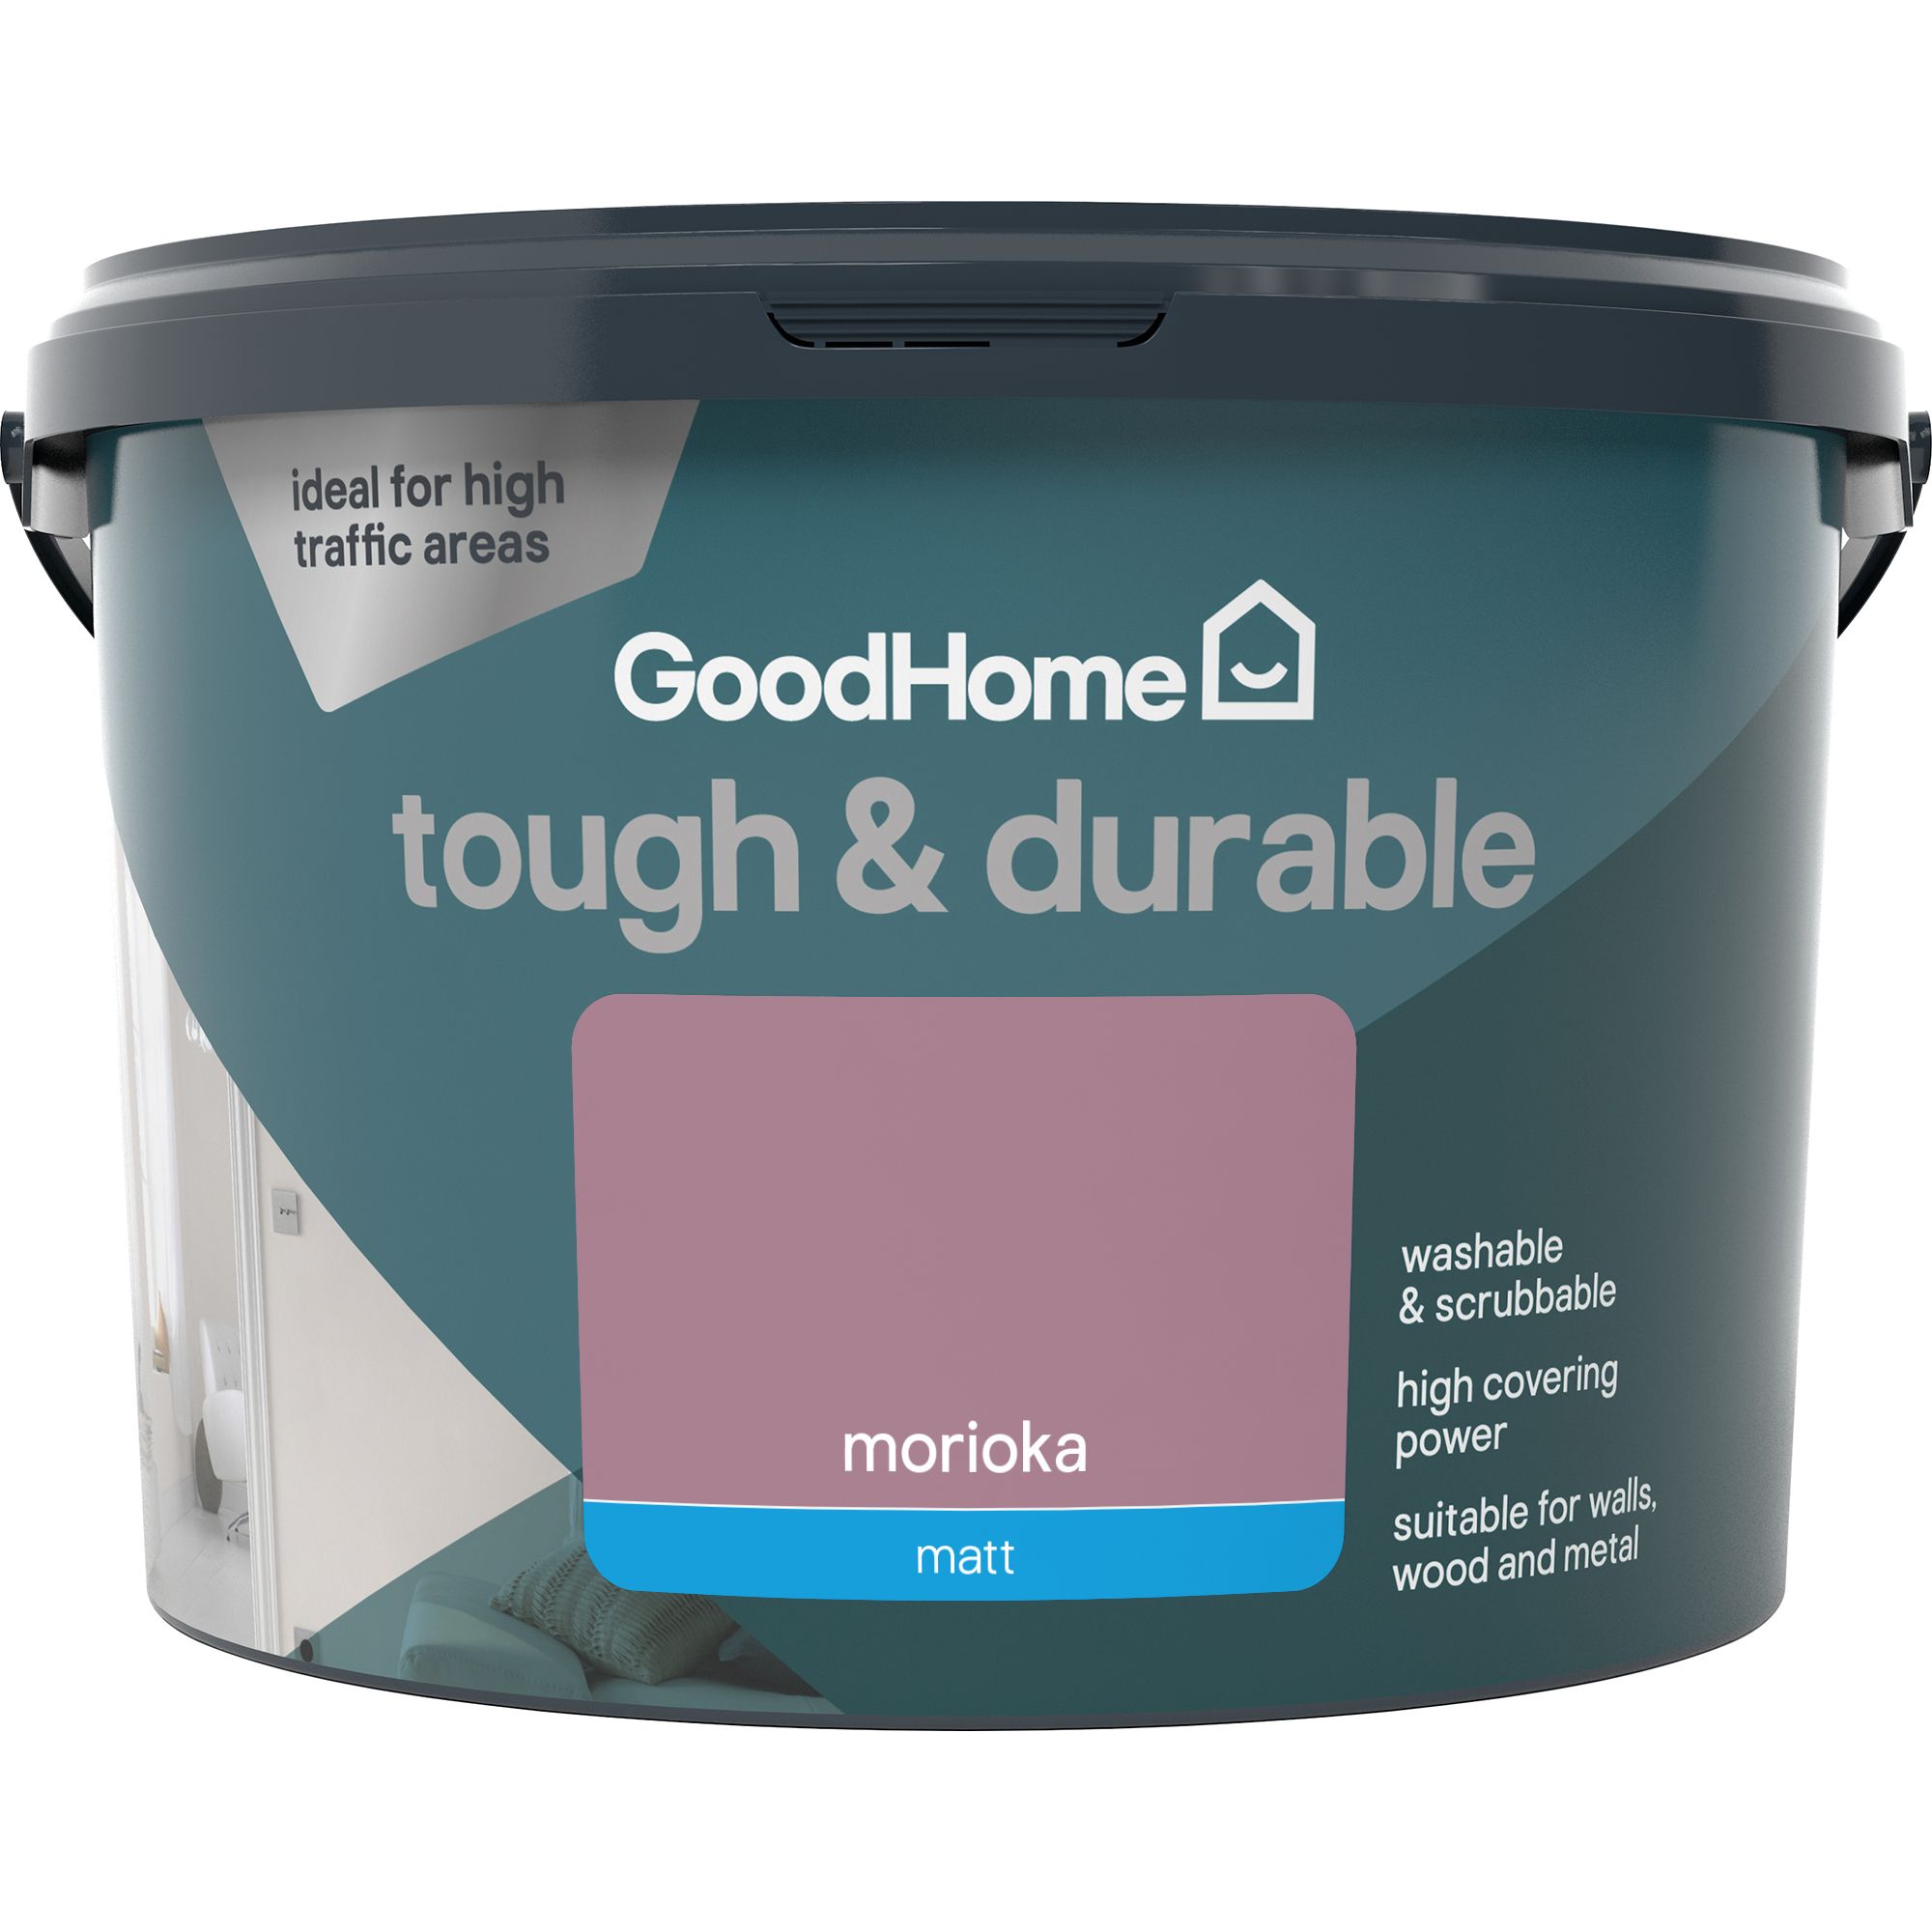 GoodHome Tough & Durable Morioka Matt Emulsion paint, 2.5L